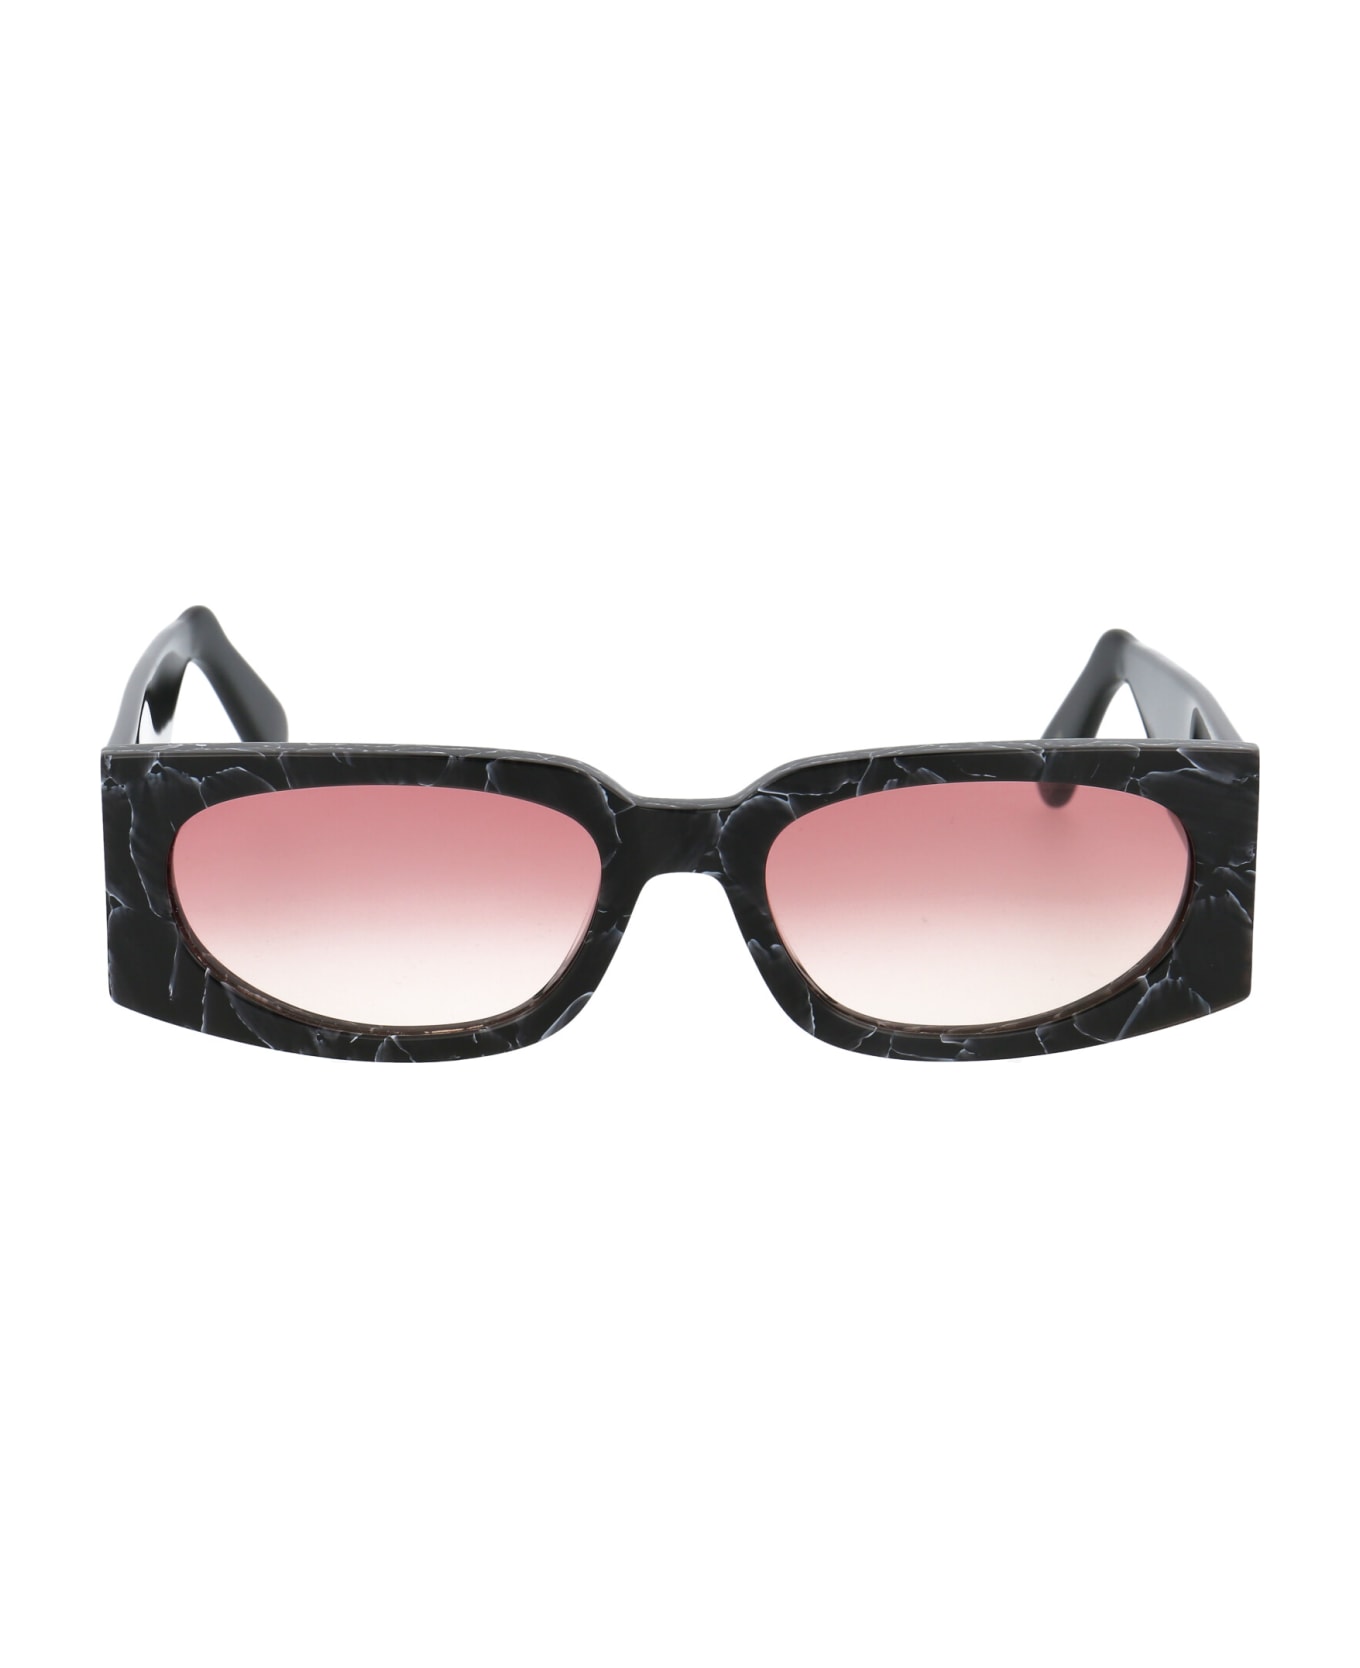 GCDS Gd0016 Sunglasses - 01T BLACK